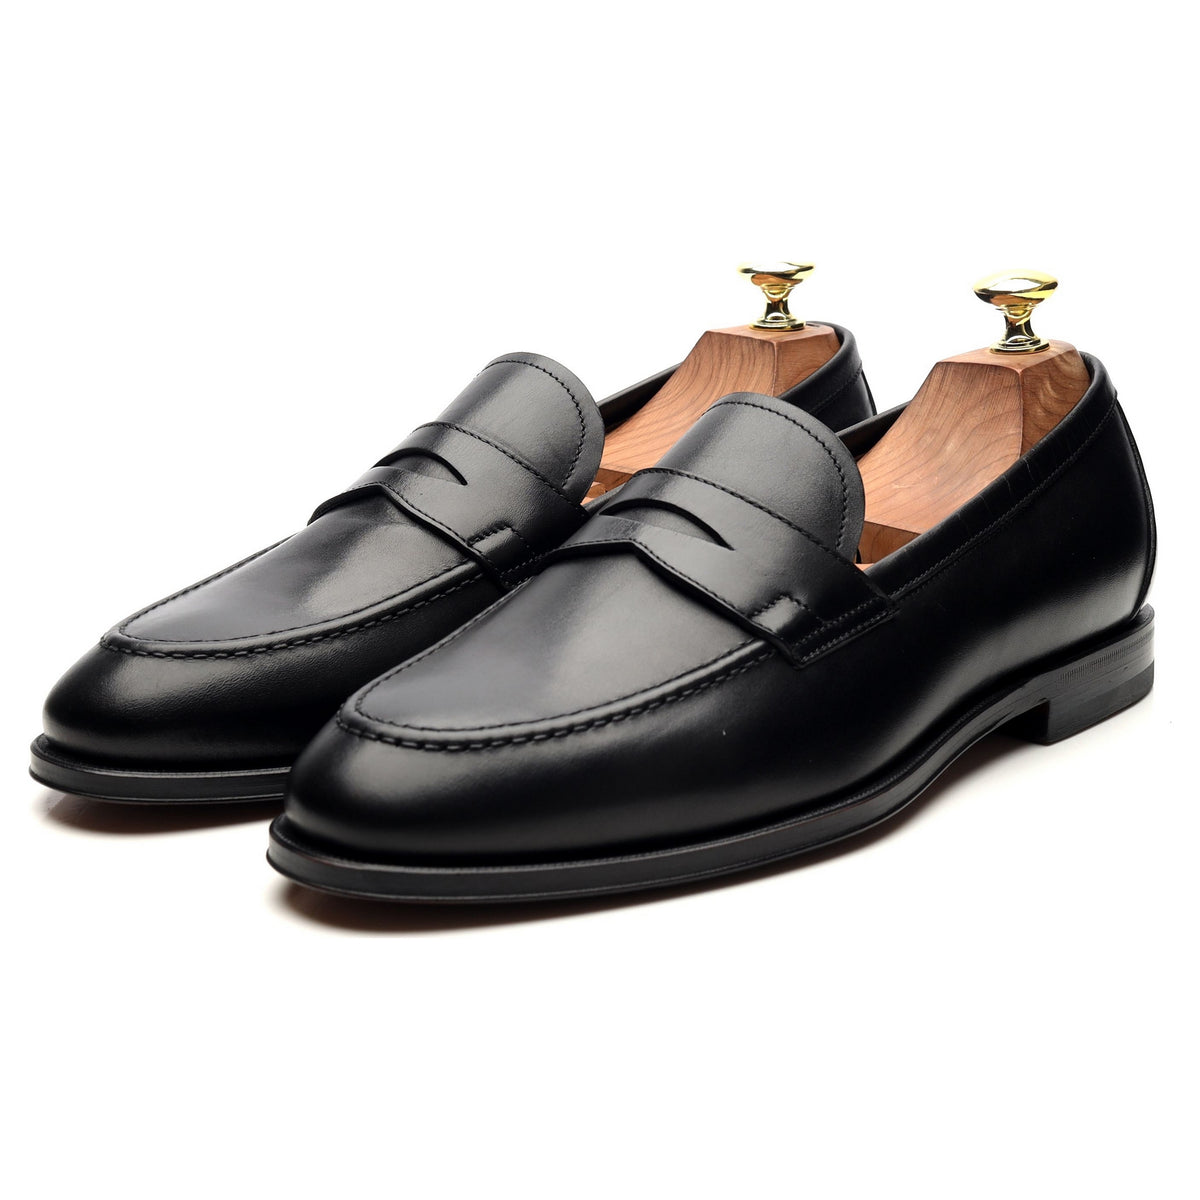 Black Leather Loafers UK 7 EU 41